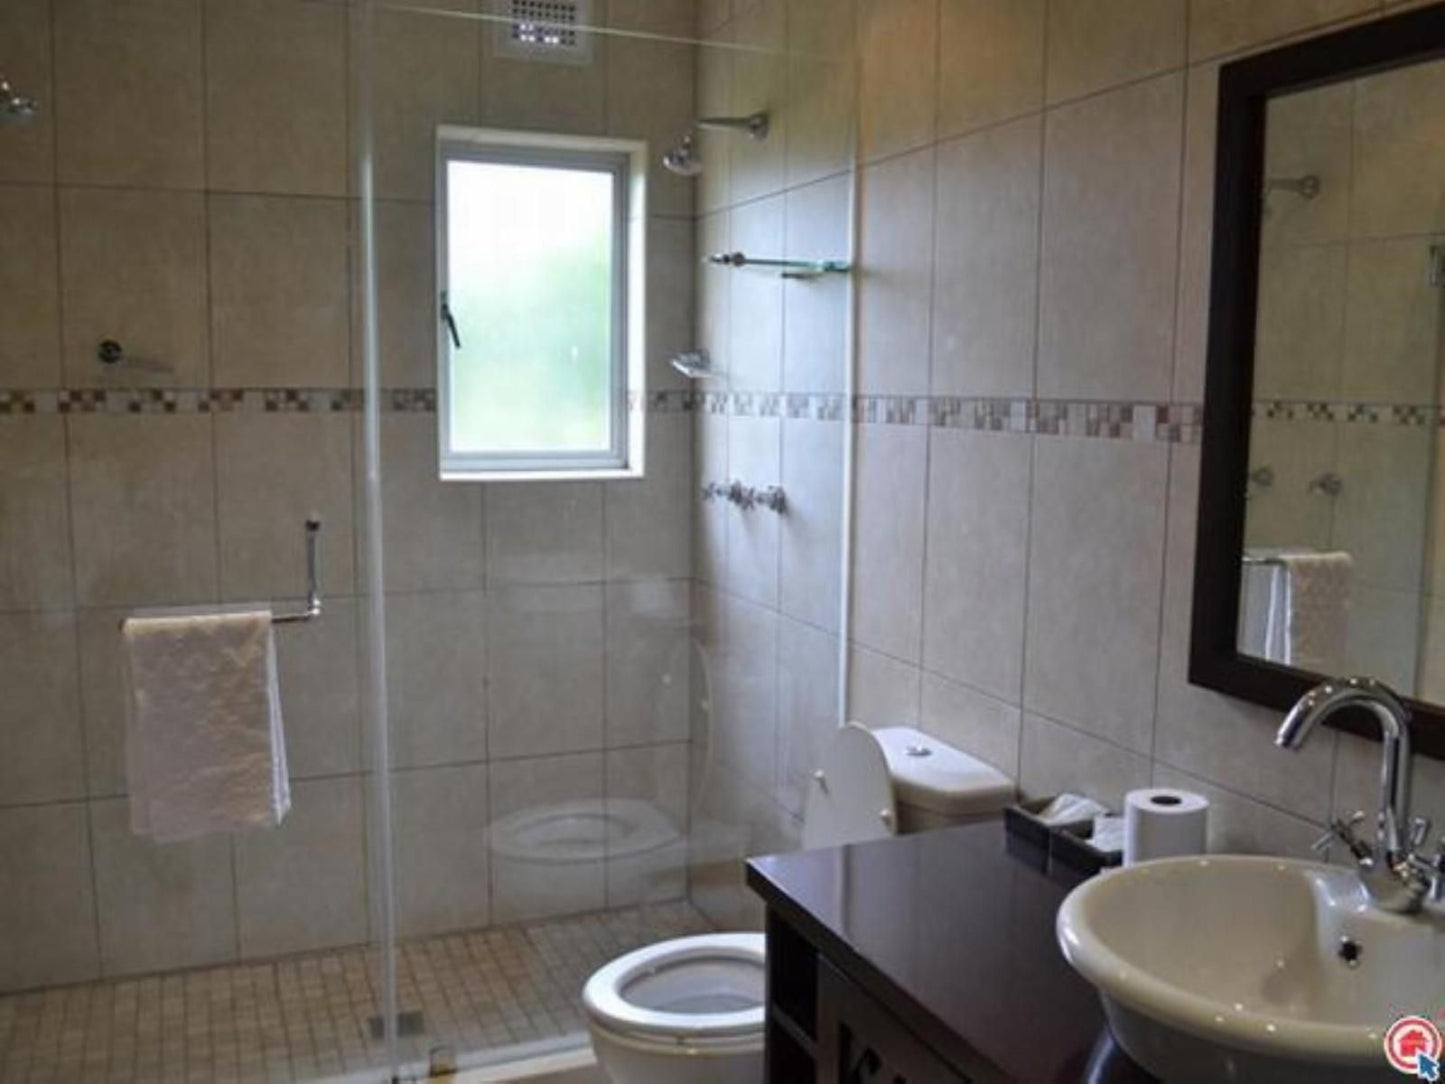 Eden River Lodge Scottburgh Kwazulu Natal South Africa Unsaturated, Bathroom